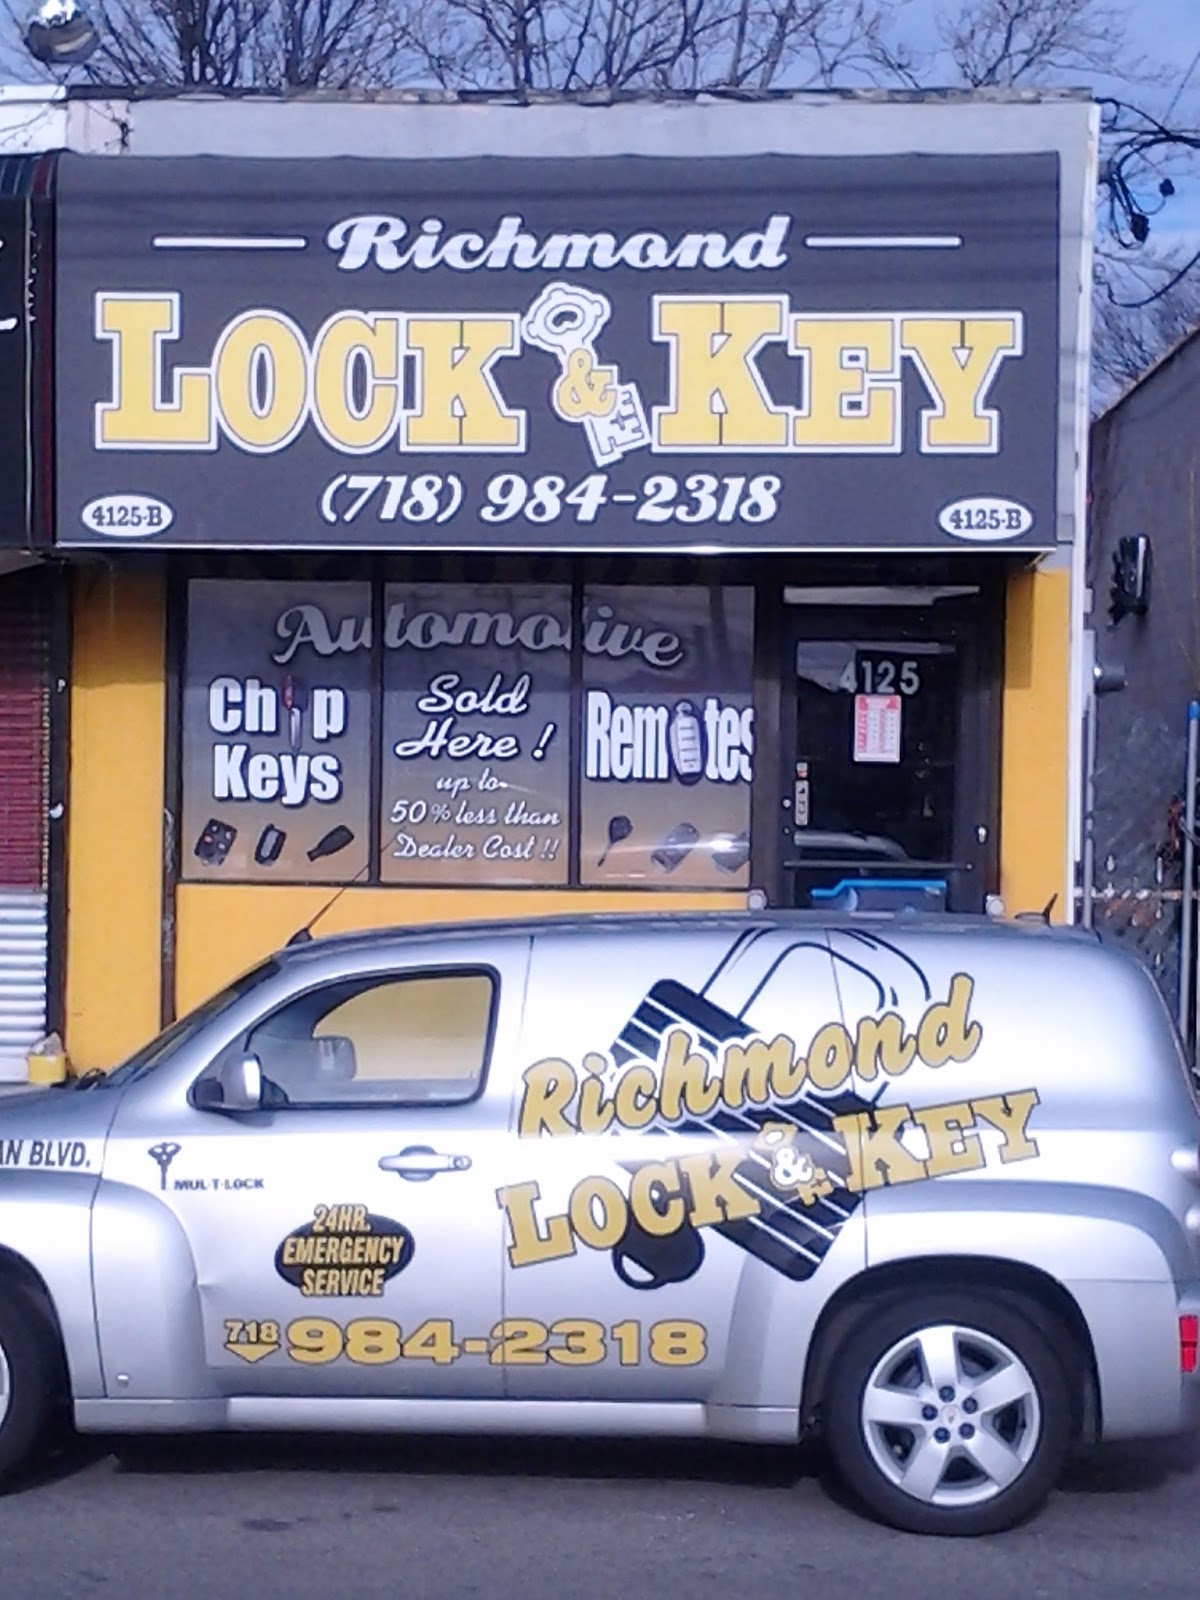 Photo of Richmond Lock and Key - Locksmith Staten Island in Staten Island City, New York, United States - 3 Picture of Point of interest, Establishment, Store, Locksmith